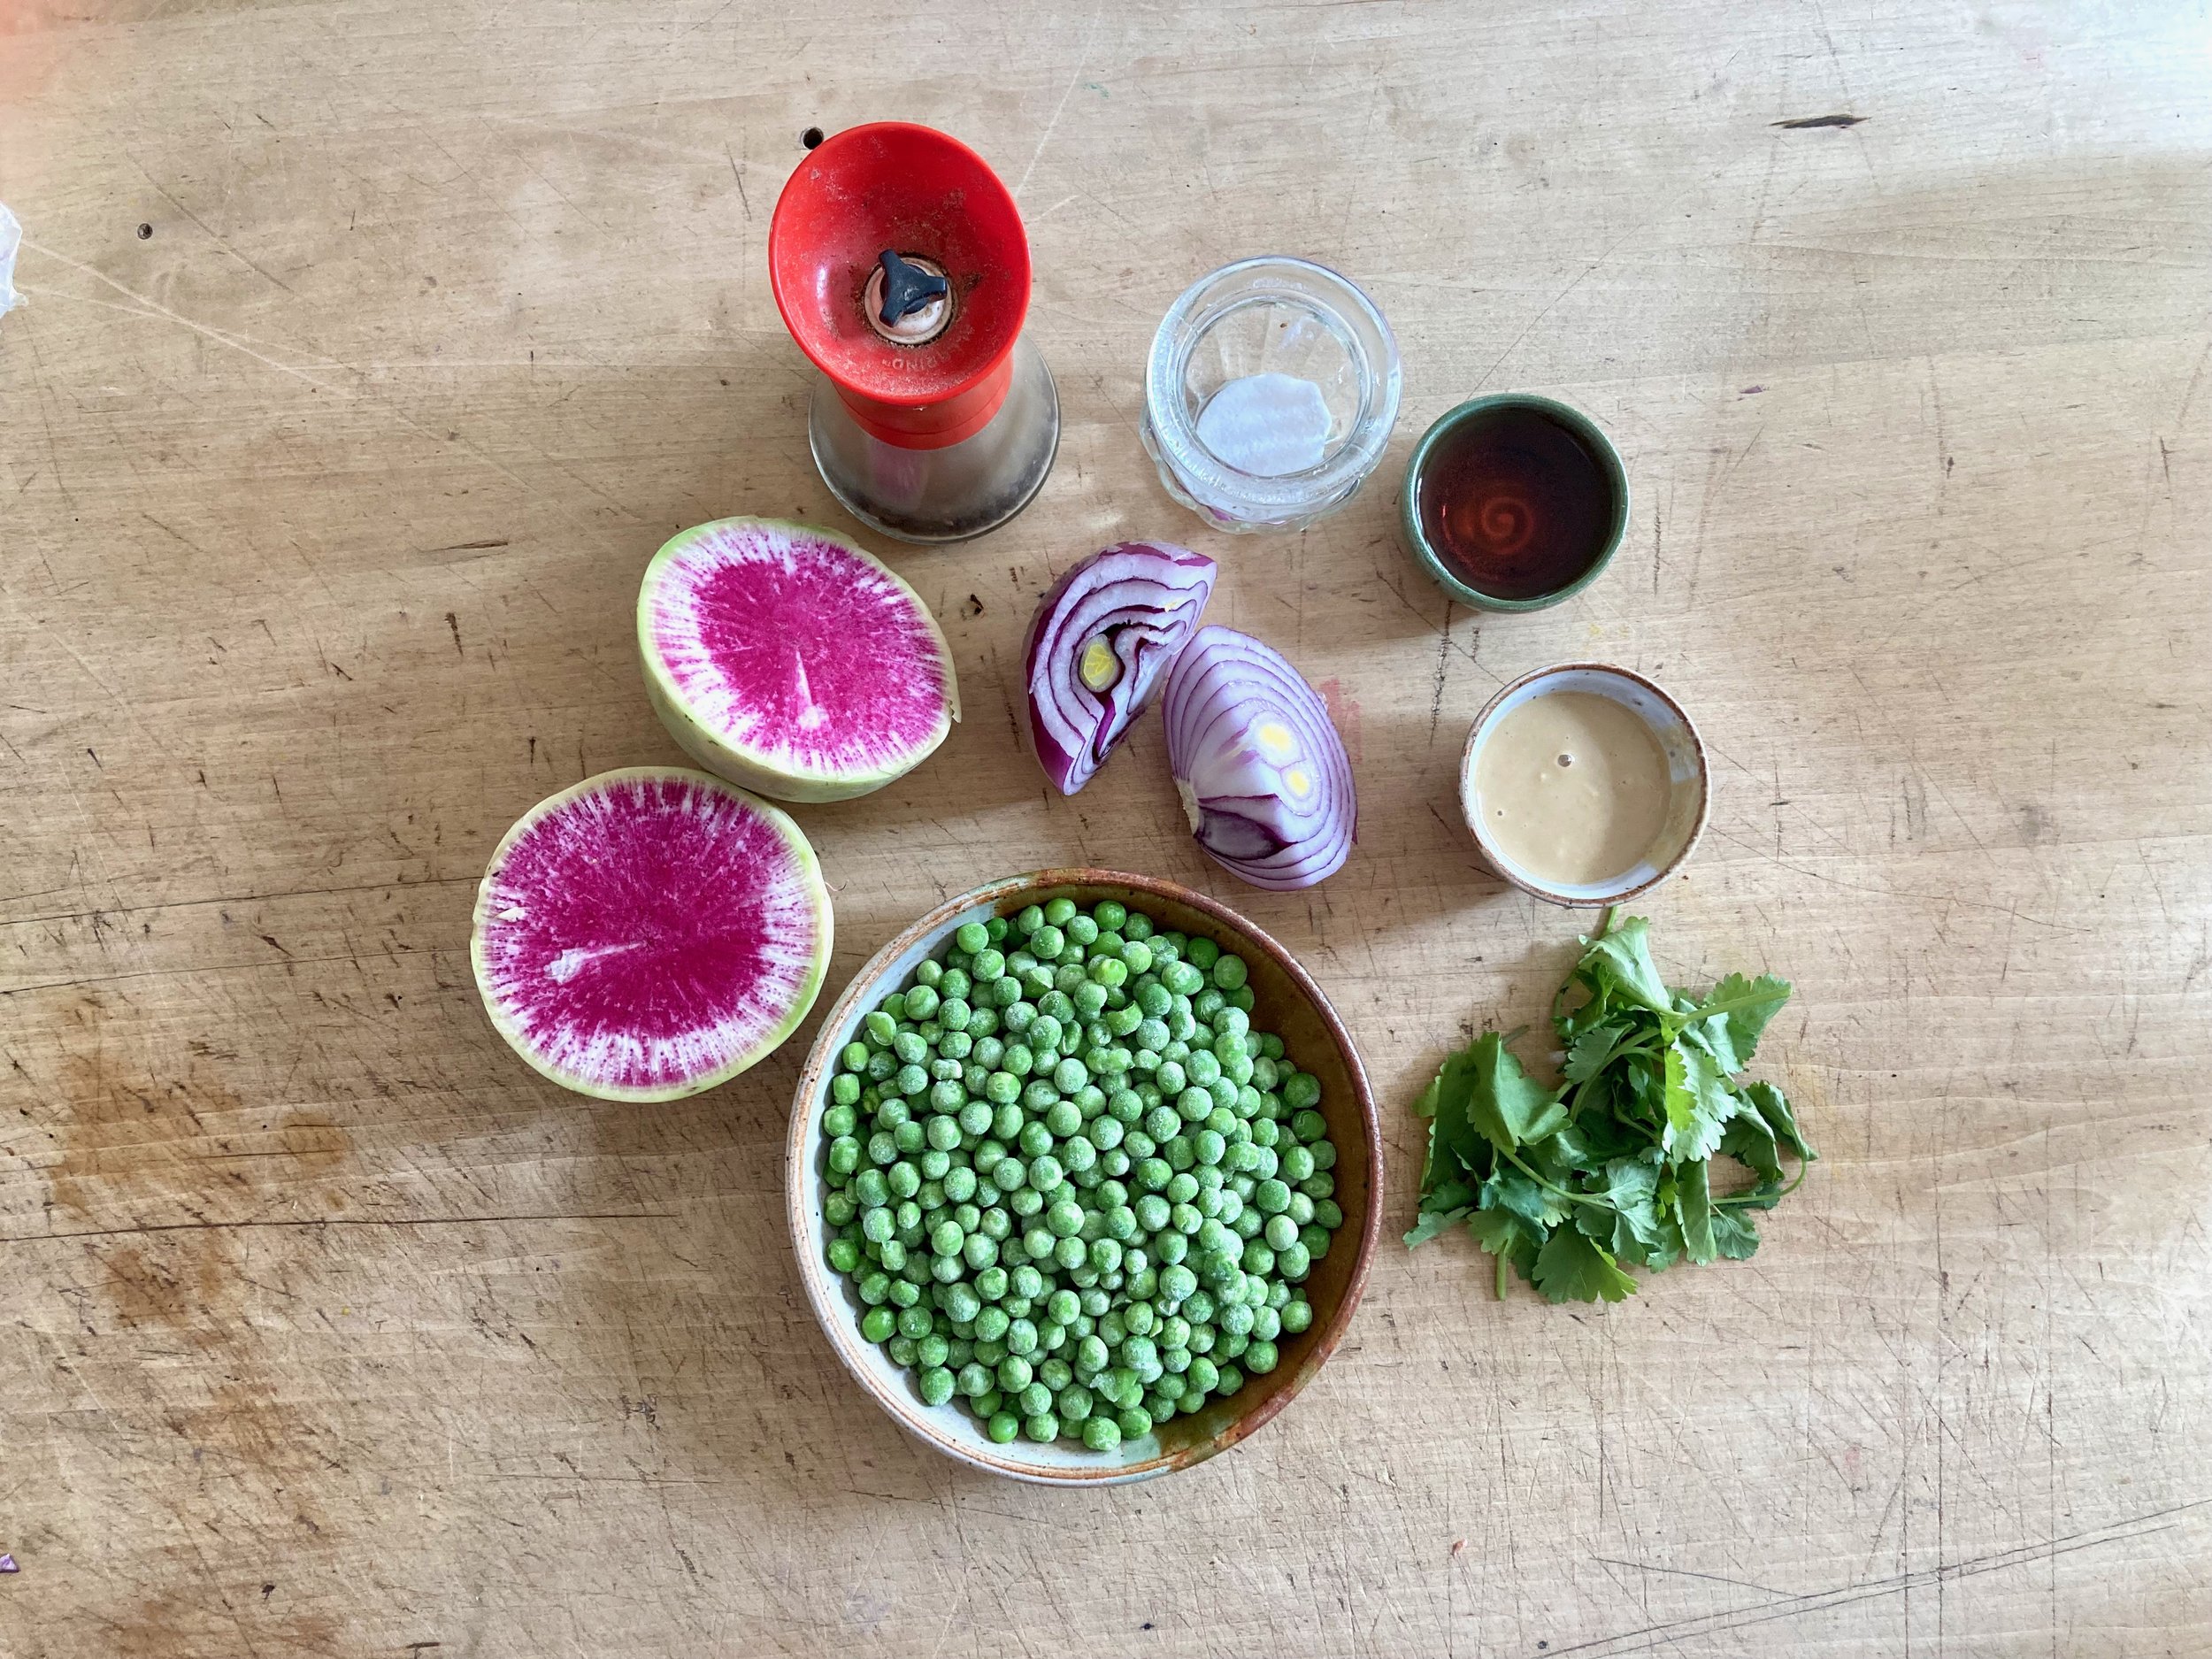 Snap Pea and Radish Salad with Tahini Dressing Recipe